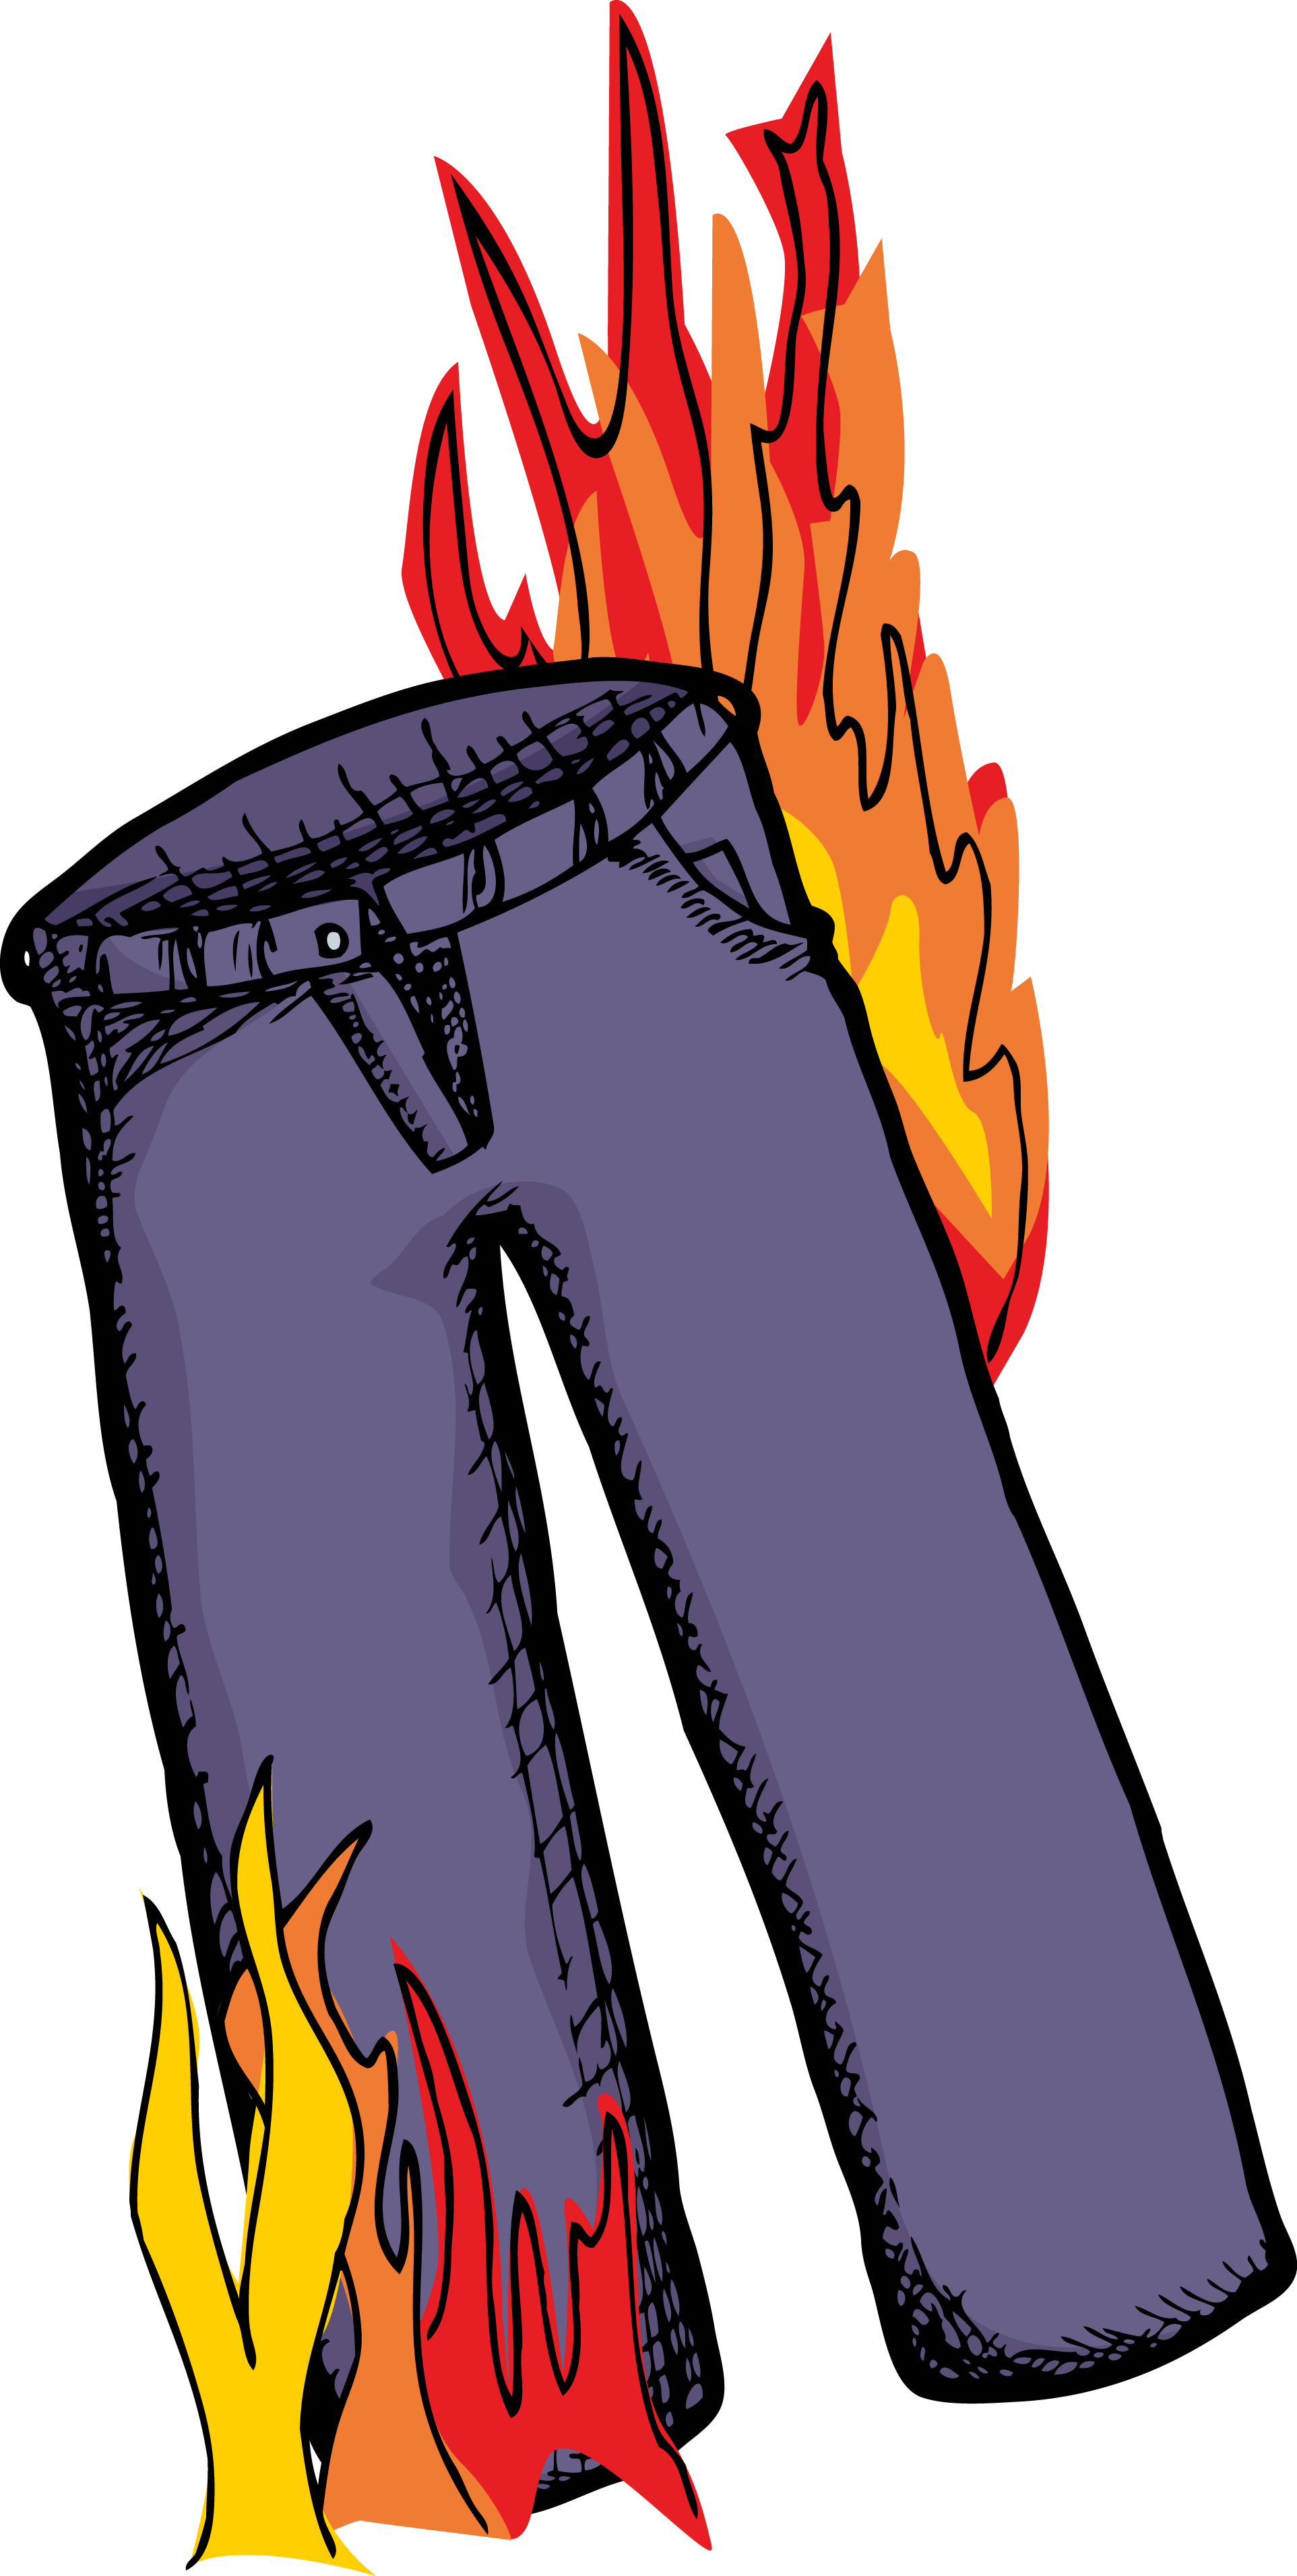 Patent Reform Opponents Keep Making Stuff Up - Liar Liar Pants On Fire (1925x3822)